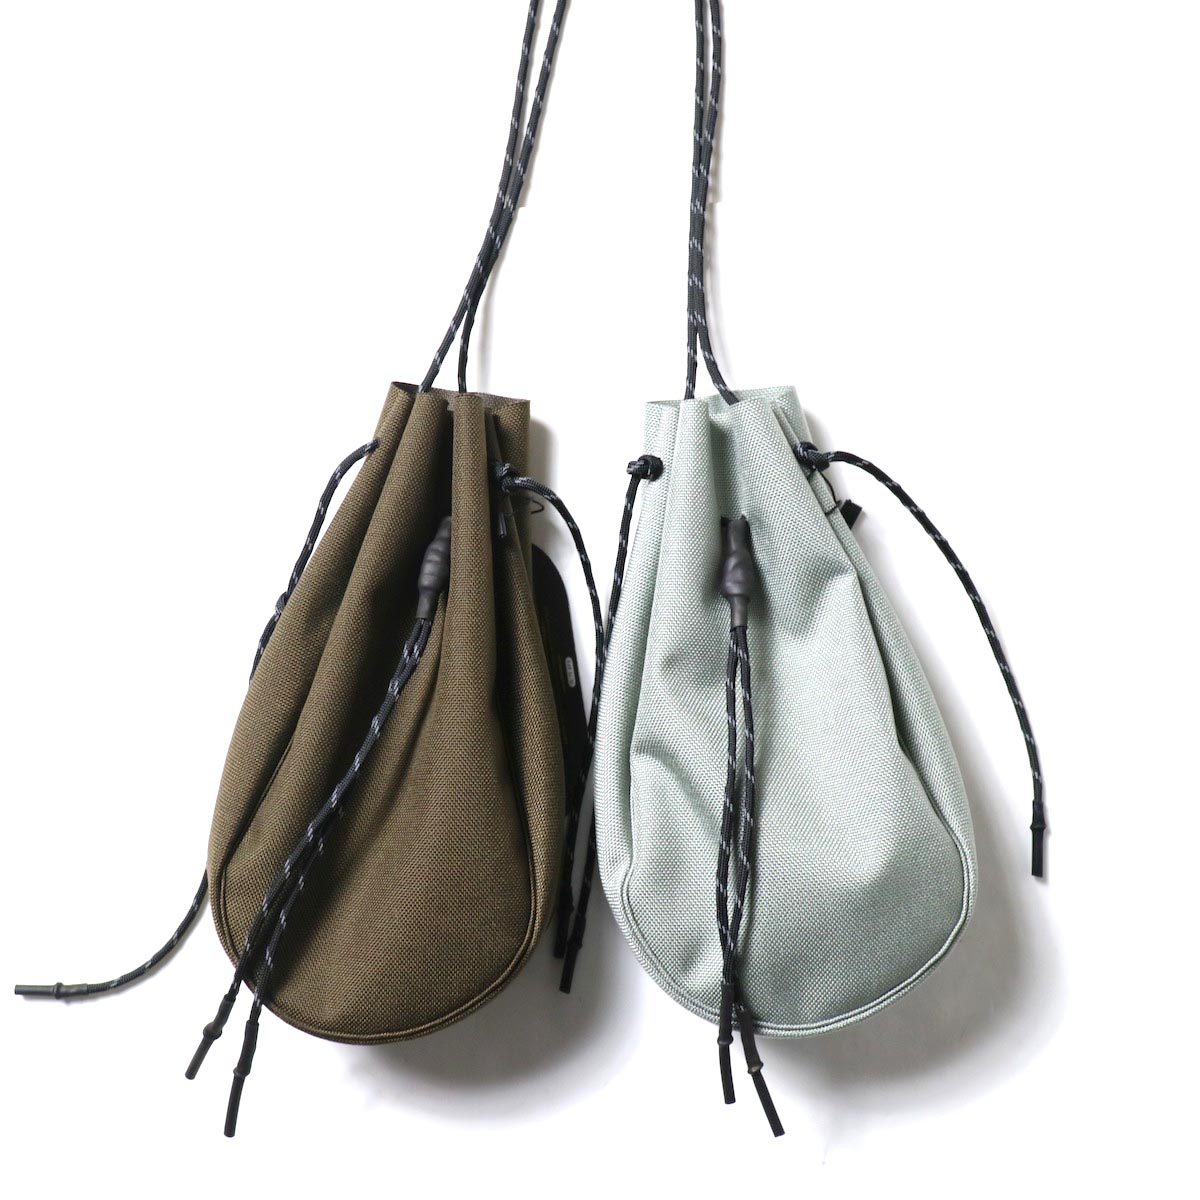 吉岡衣料店 / drawstring bag -S-. (左：Brown / 右:gray)